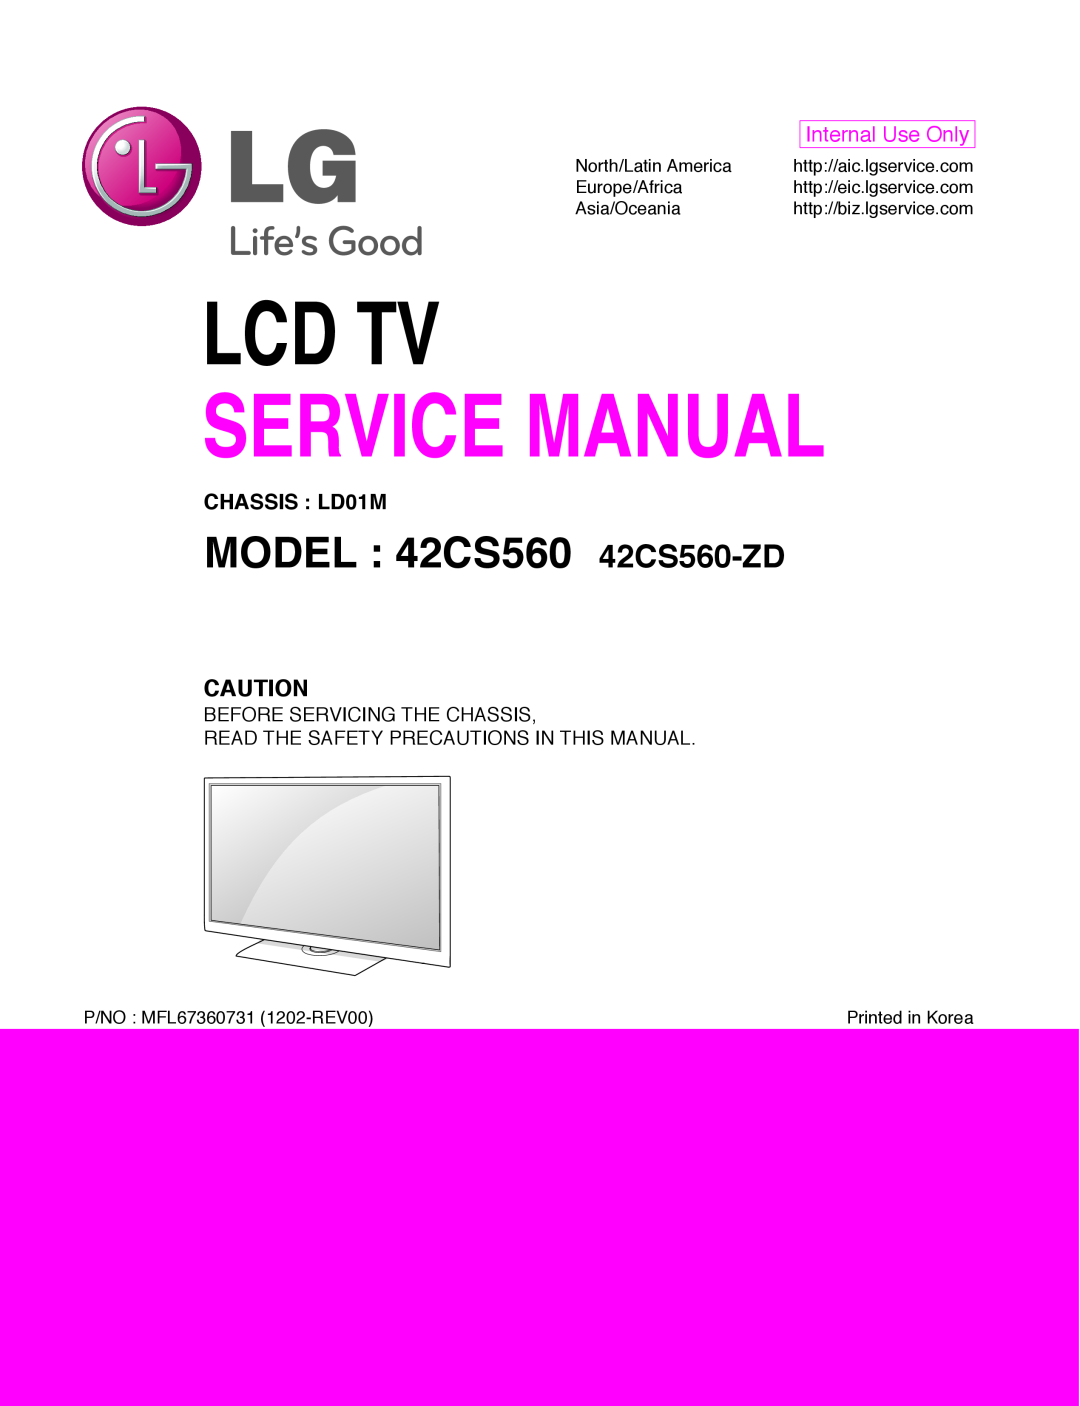 LG Electronics service manual CHASSIS LD01M, Lcd Tv, MODEL 42CS560 42CS560-ZD, Internal Use Only, North/Latin America 